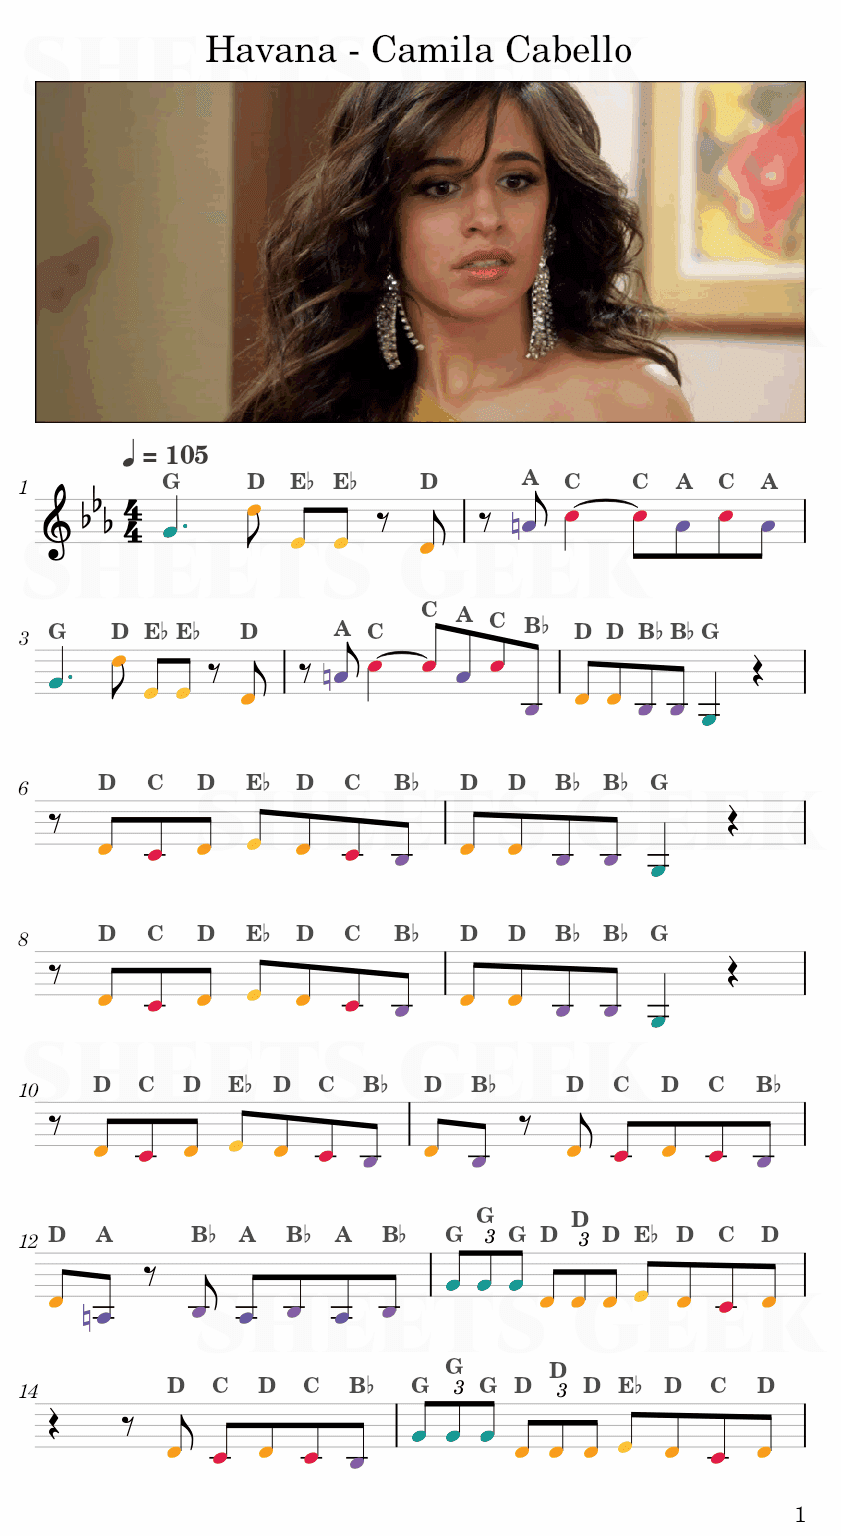 Havana - Camila Cabello Easy Sheet Music Free for piano, keyboard, flute, violin, sax, cello page 1